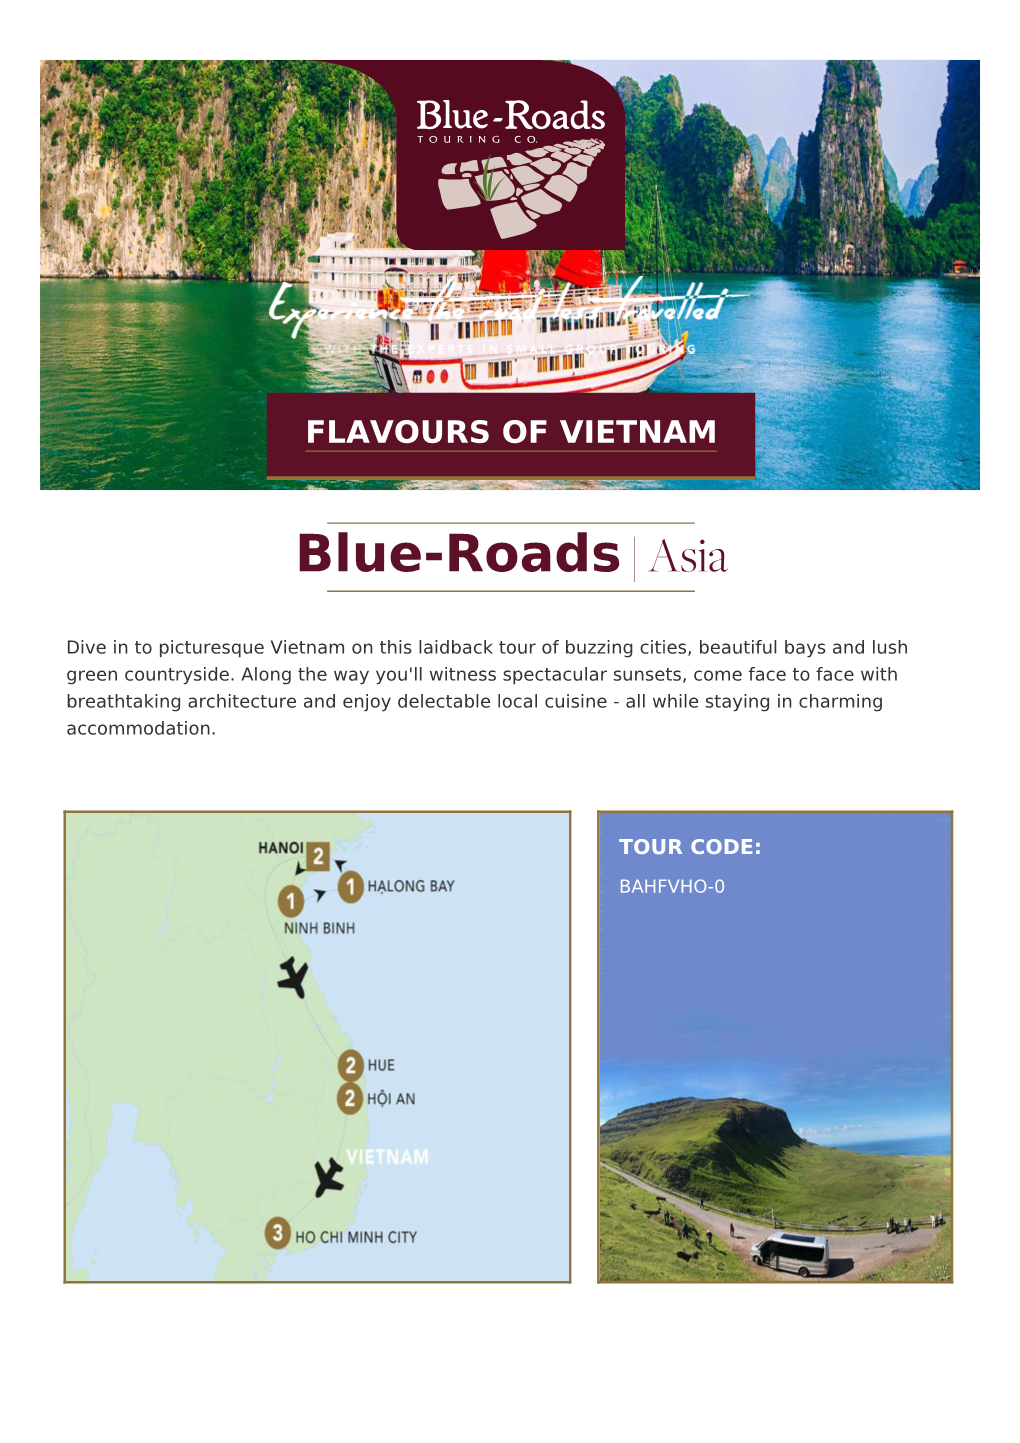 Flavours of Vietnam